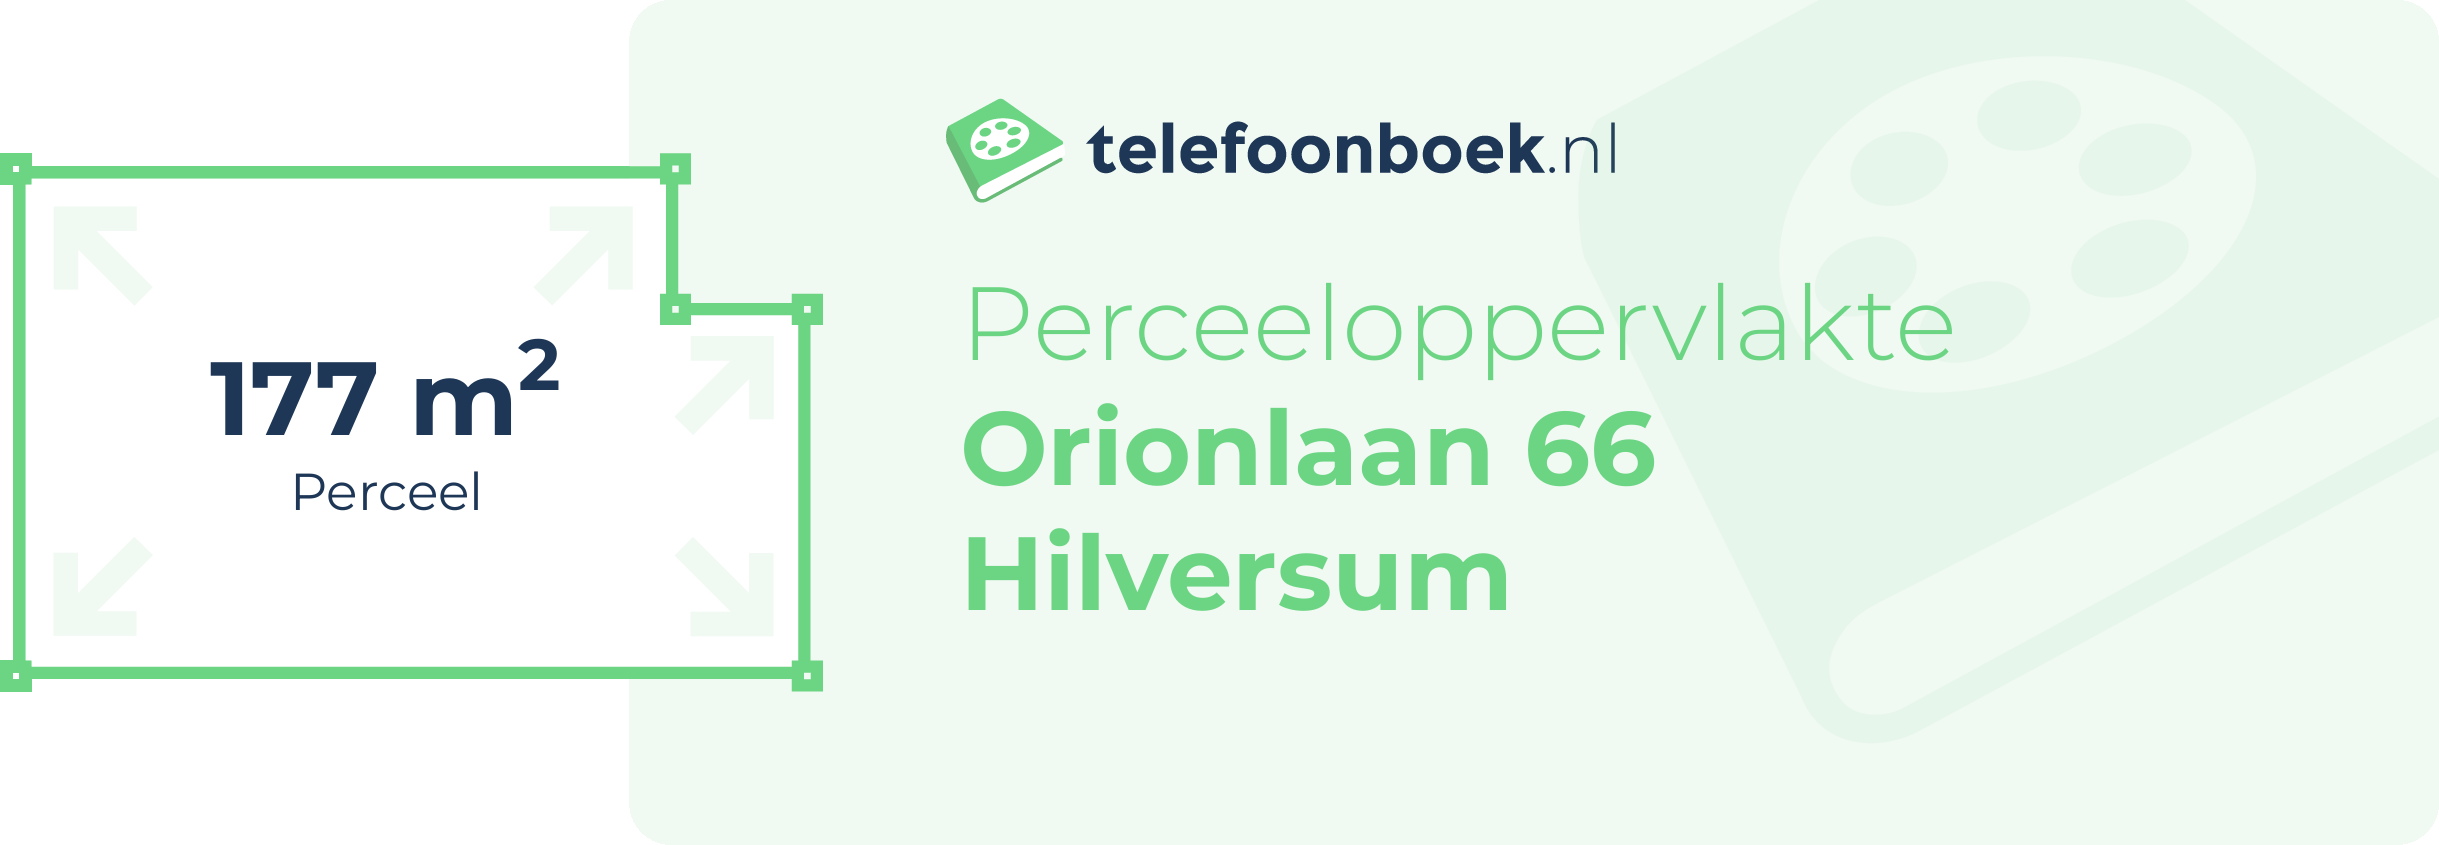 Perceeloppervlakte Orionlaan 66 Hilversum